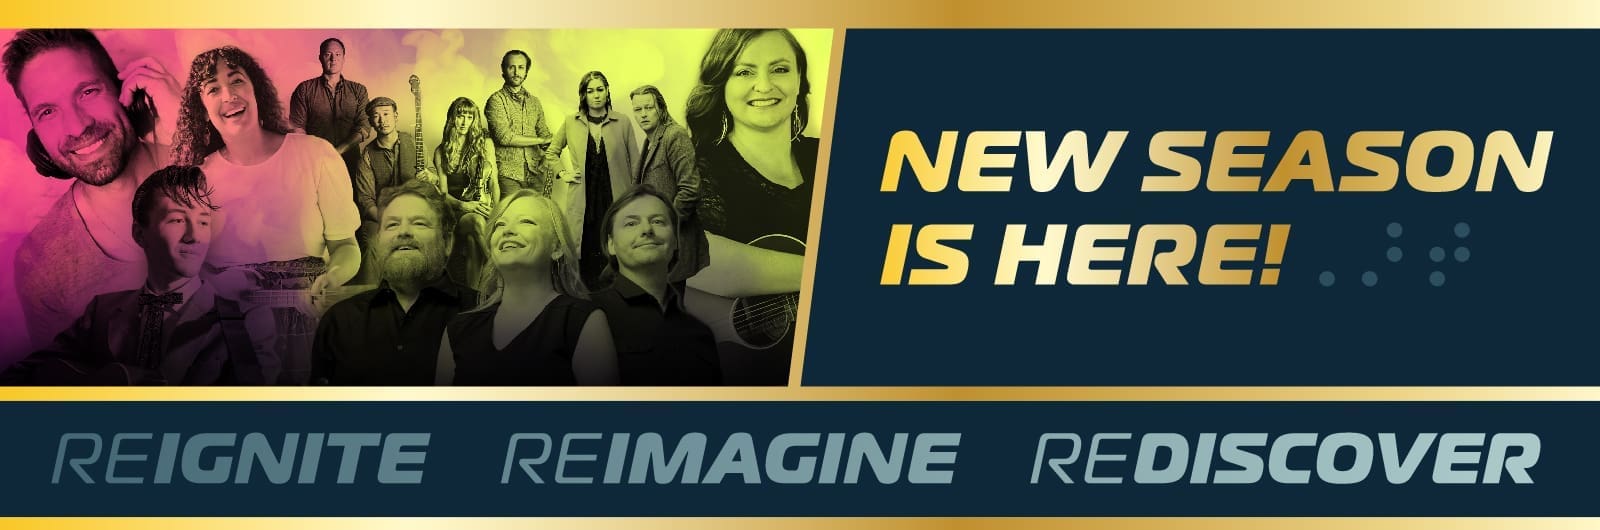 New Season is Here! Reignite, Reimagine, Rediscover